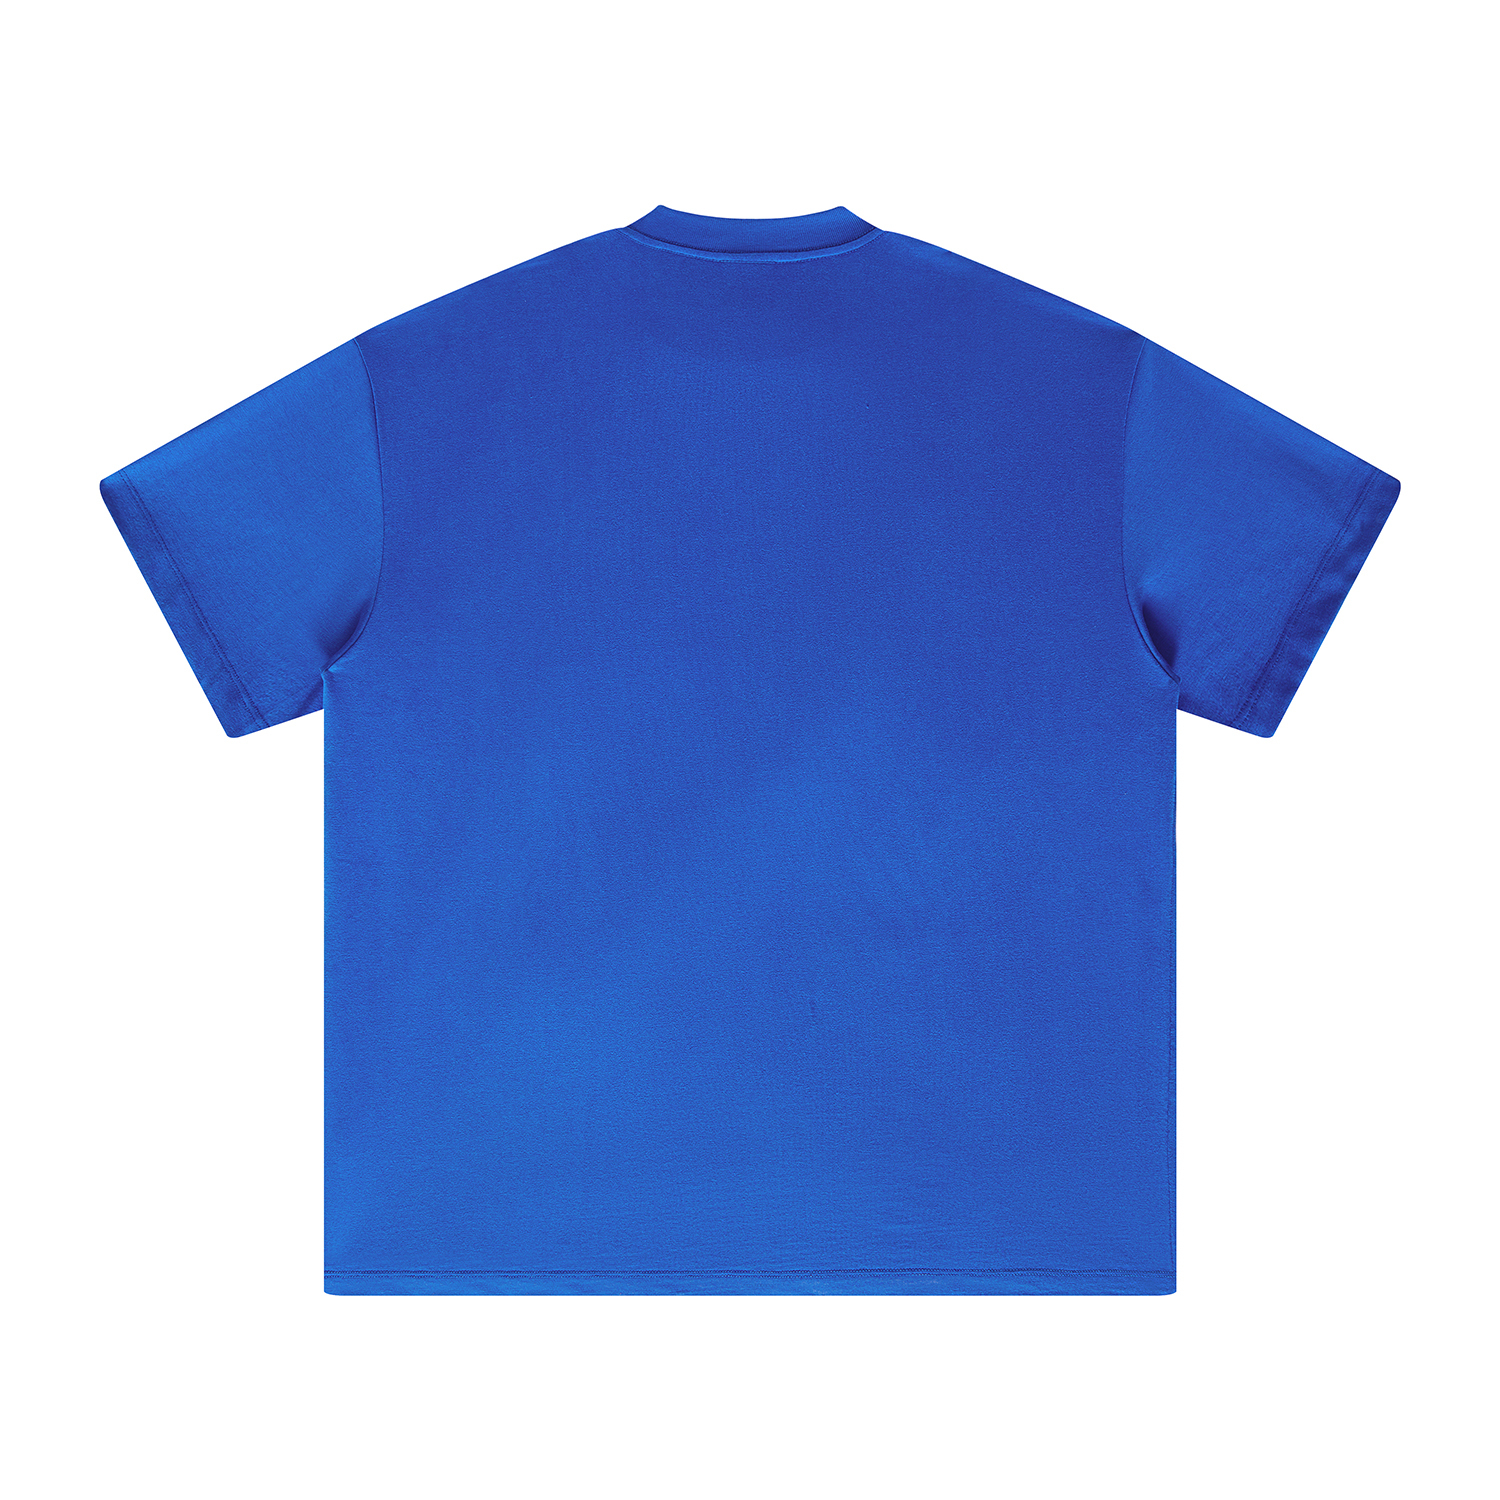 Streetwear Unisex Basic Earth Tone 100% Cotton T-Shirt - Print On Demand | HugePOD-28